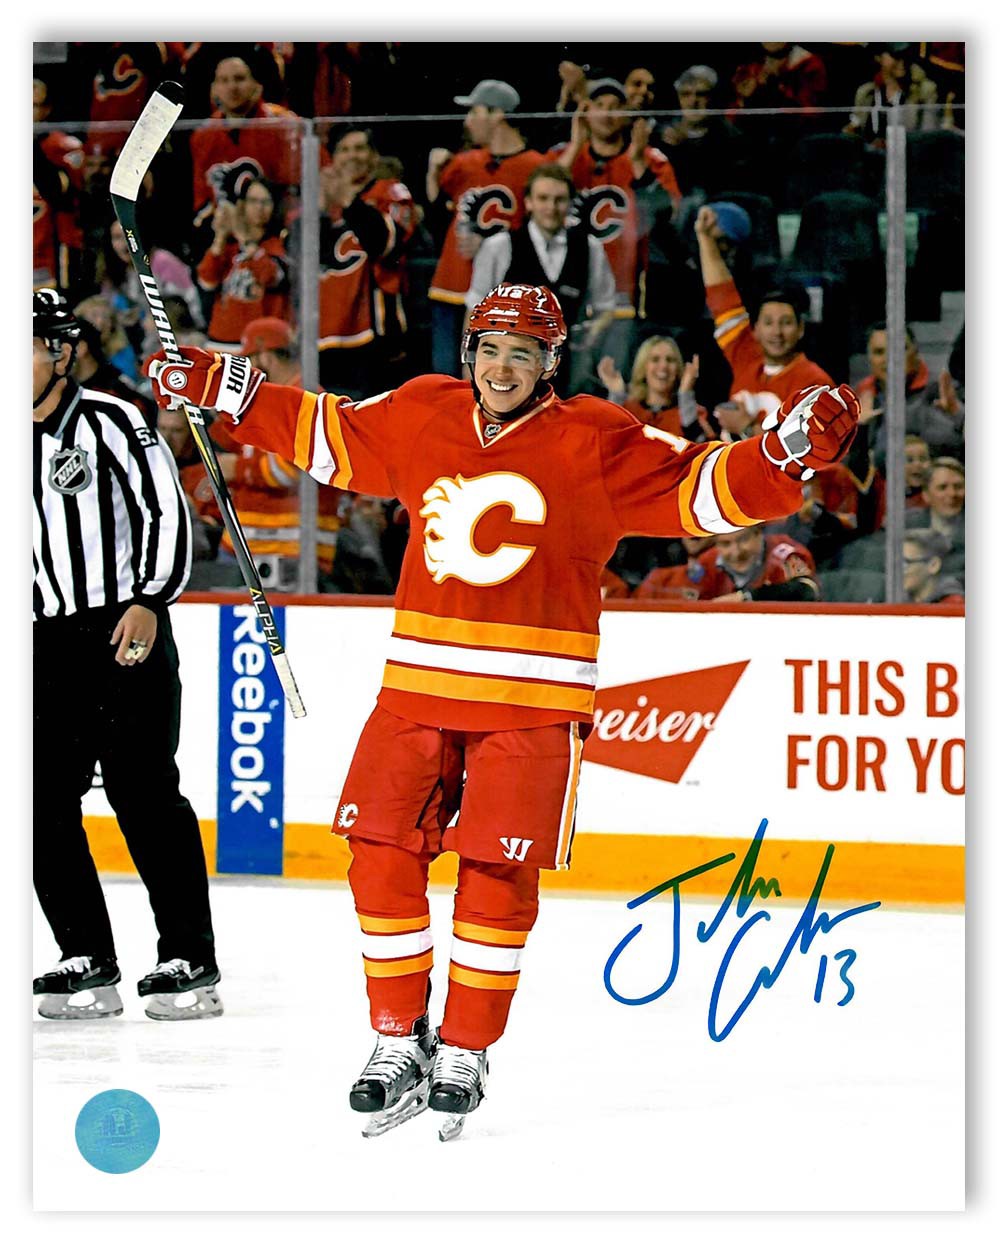 Johnny Gaudreau Autographed Calgary Flames Fanatics Jersey - NHL